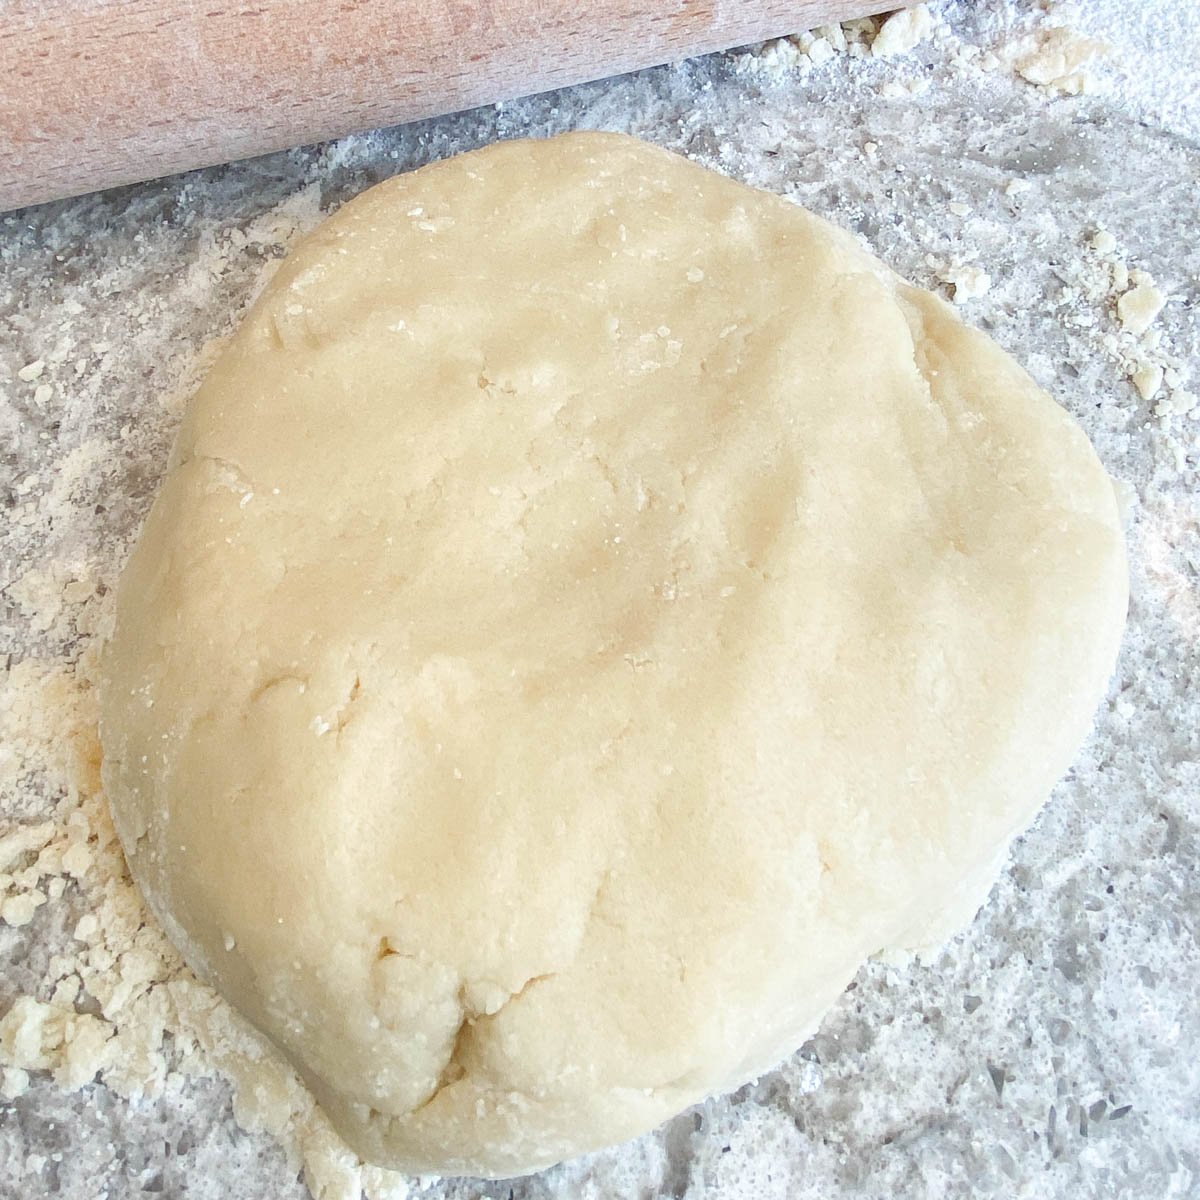 Disk of sugar cookie dough.